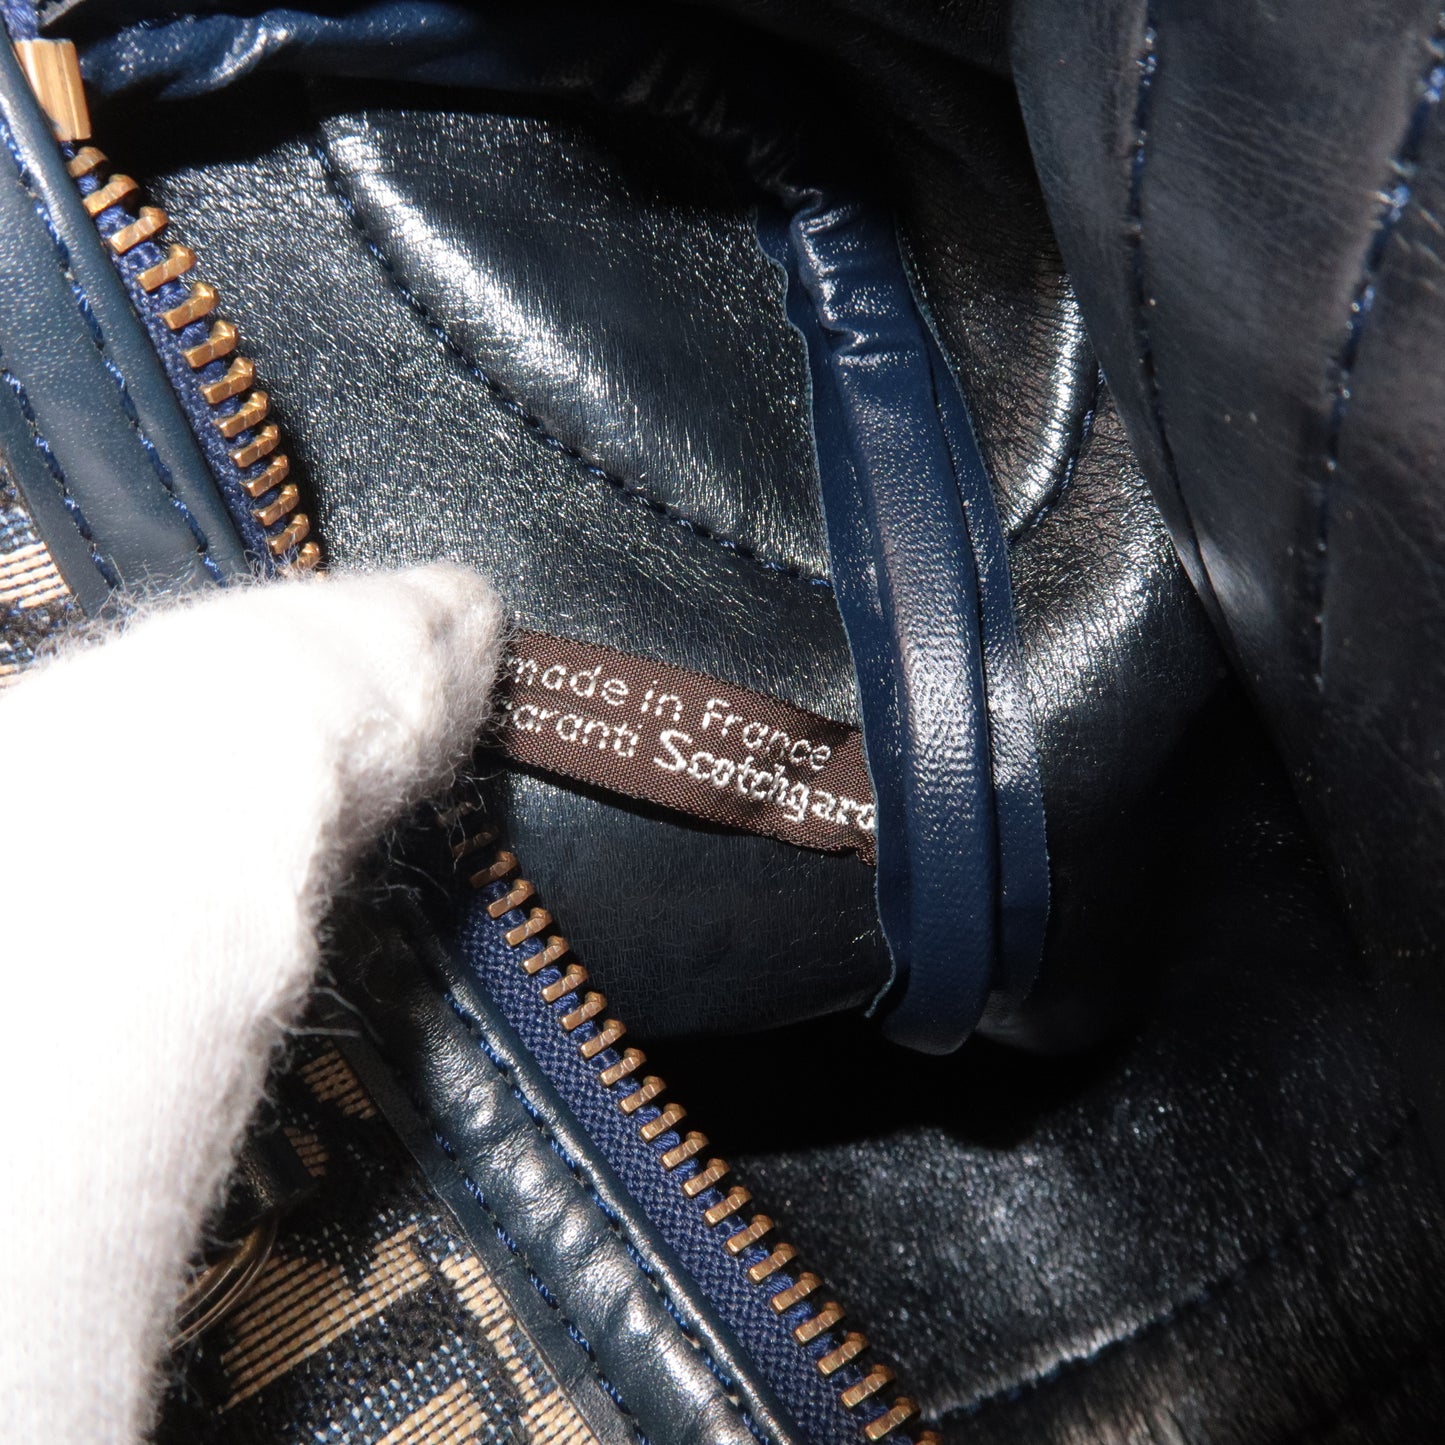 Christian Dior Trotter Canvas Leather Mini Boston Bag Navy